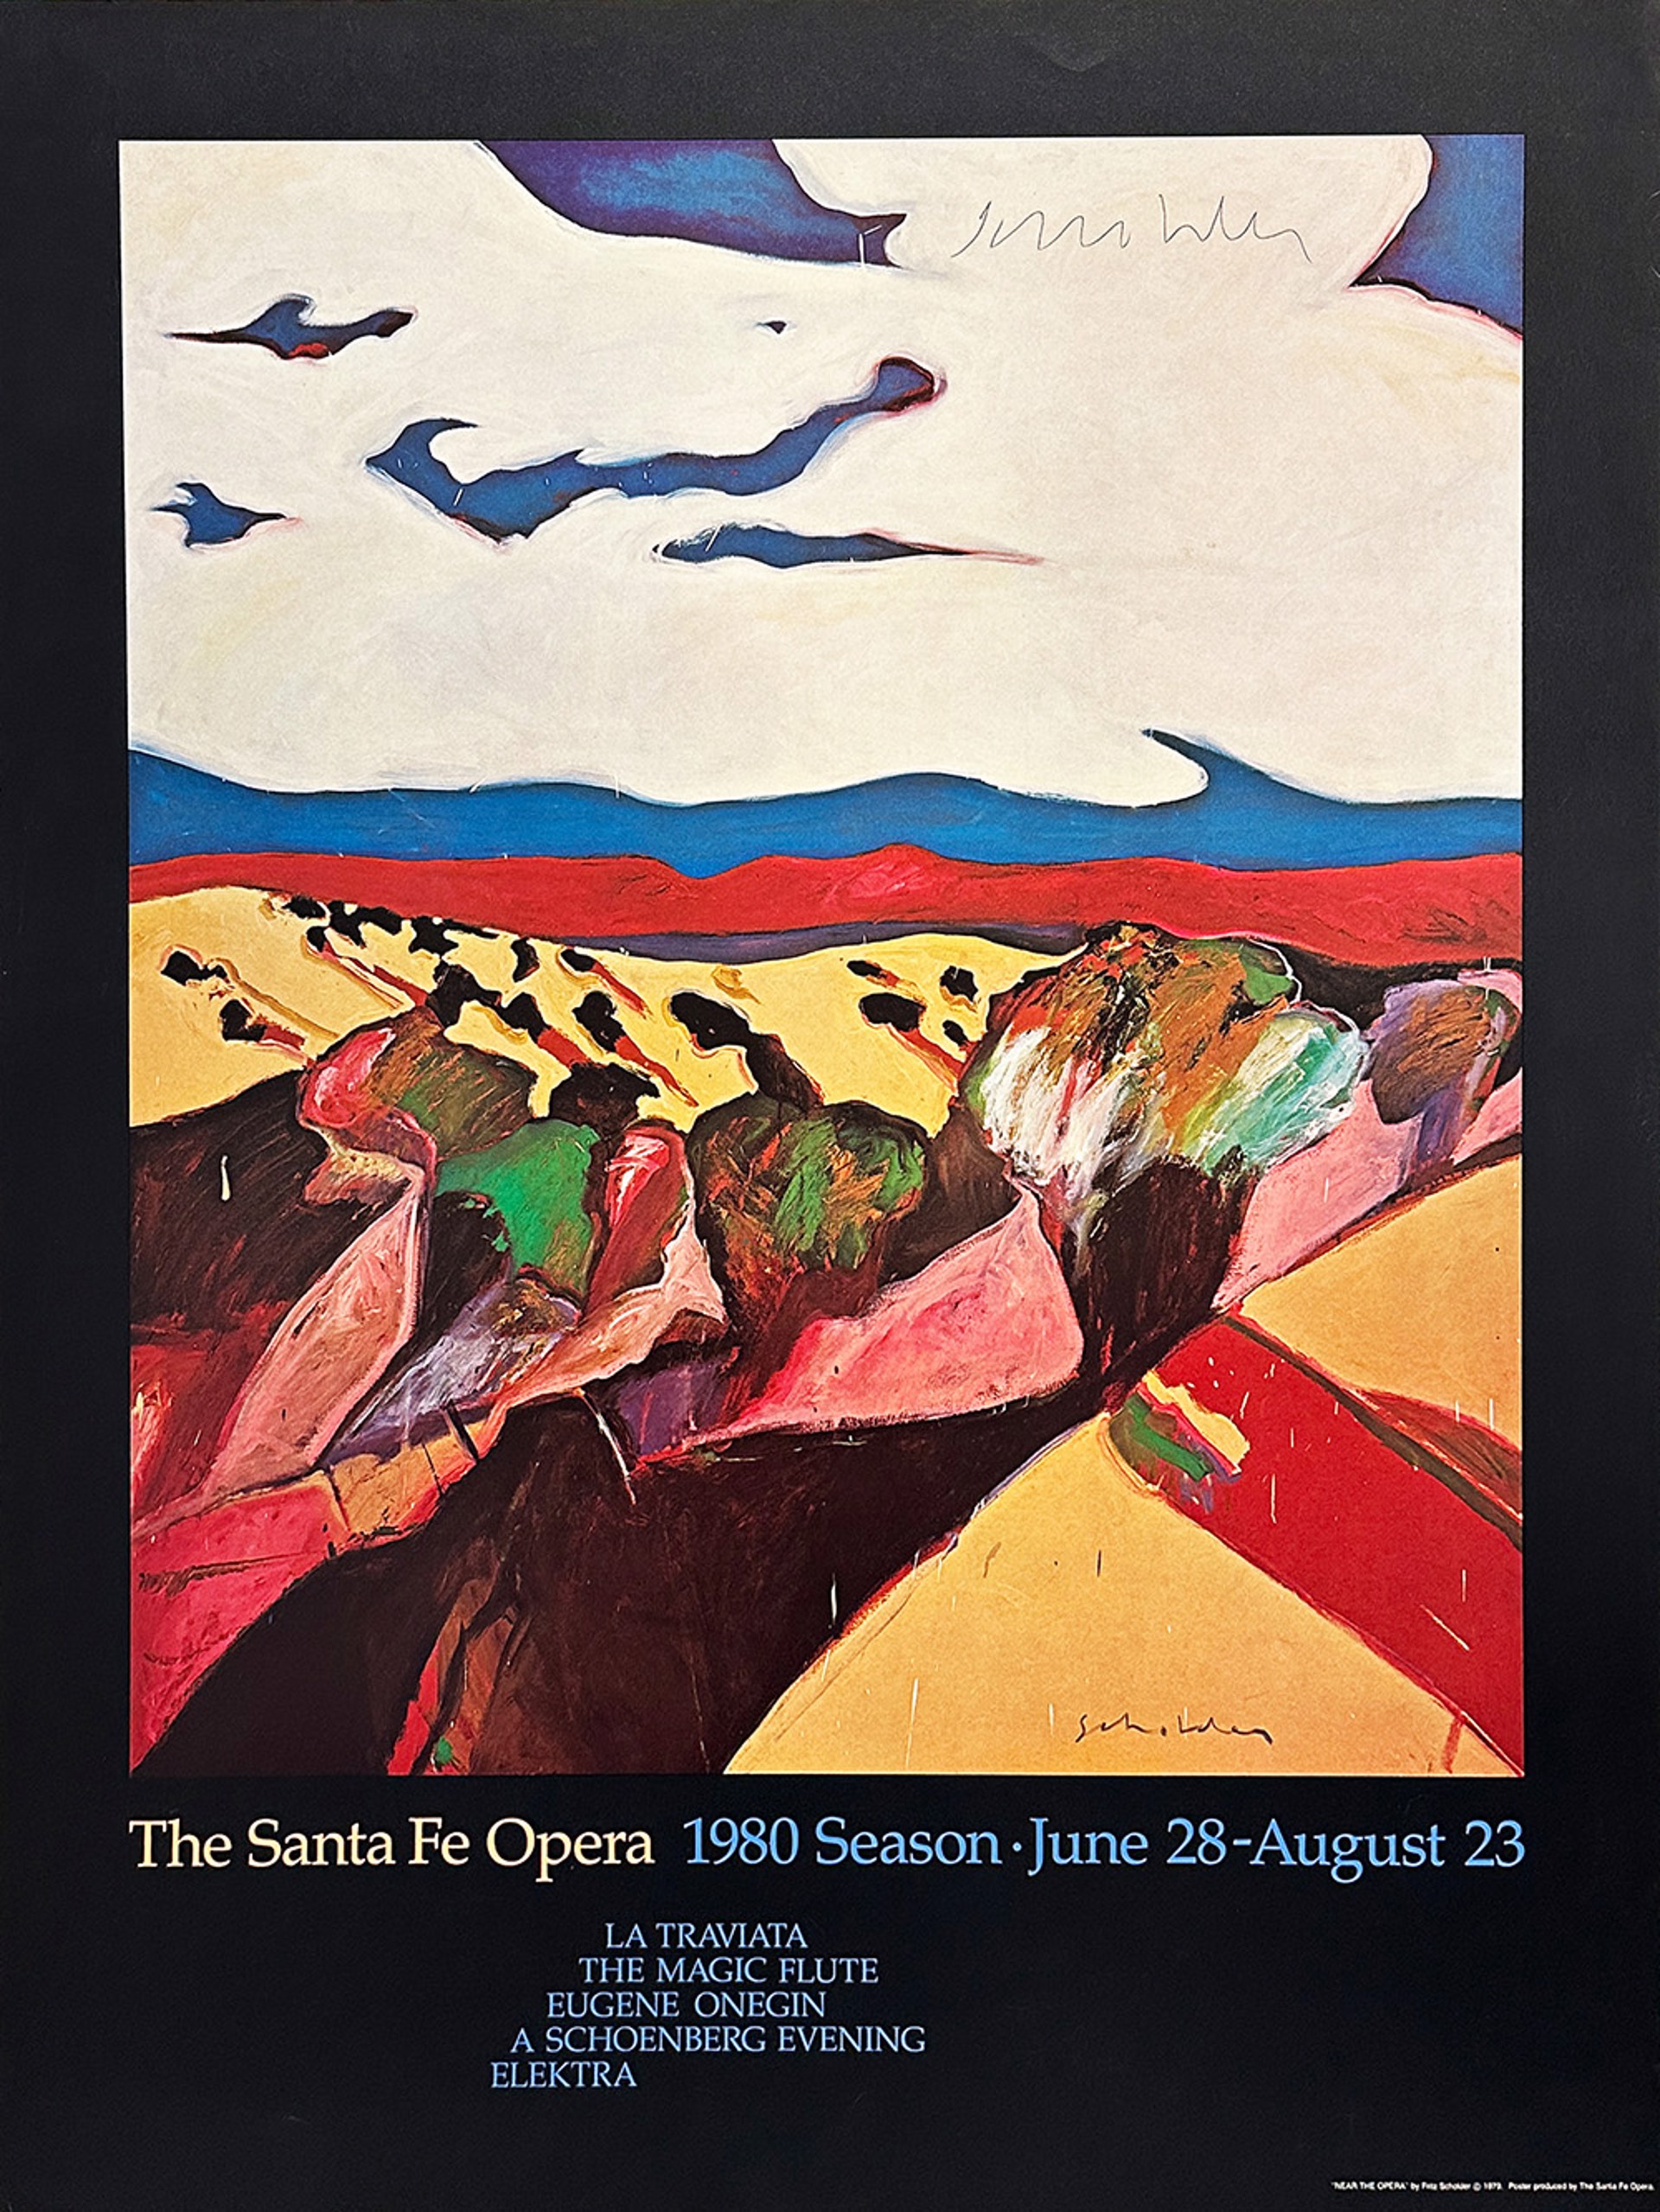 Santa Fe Opera 1980 Season by Fritz Scholder